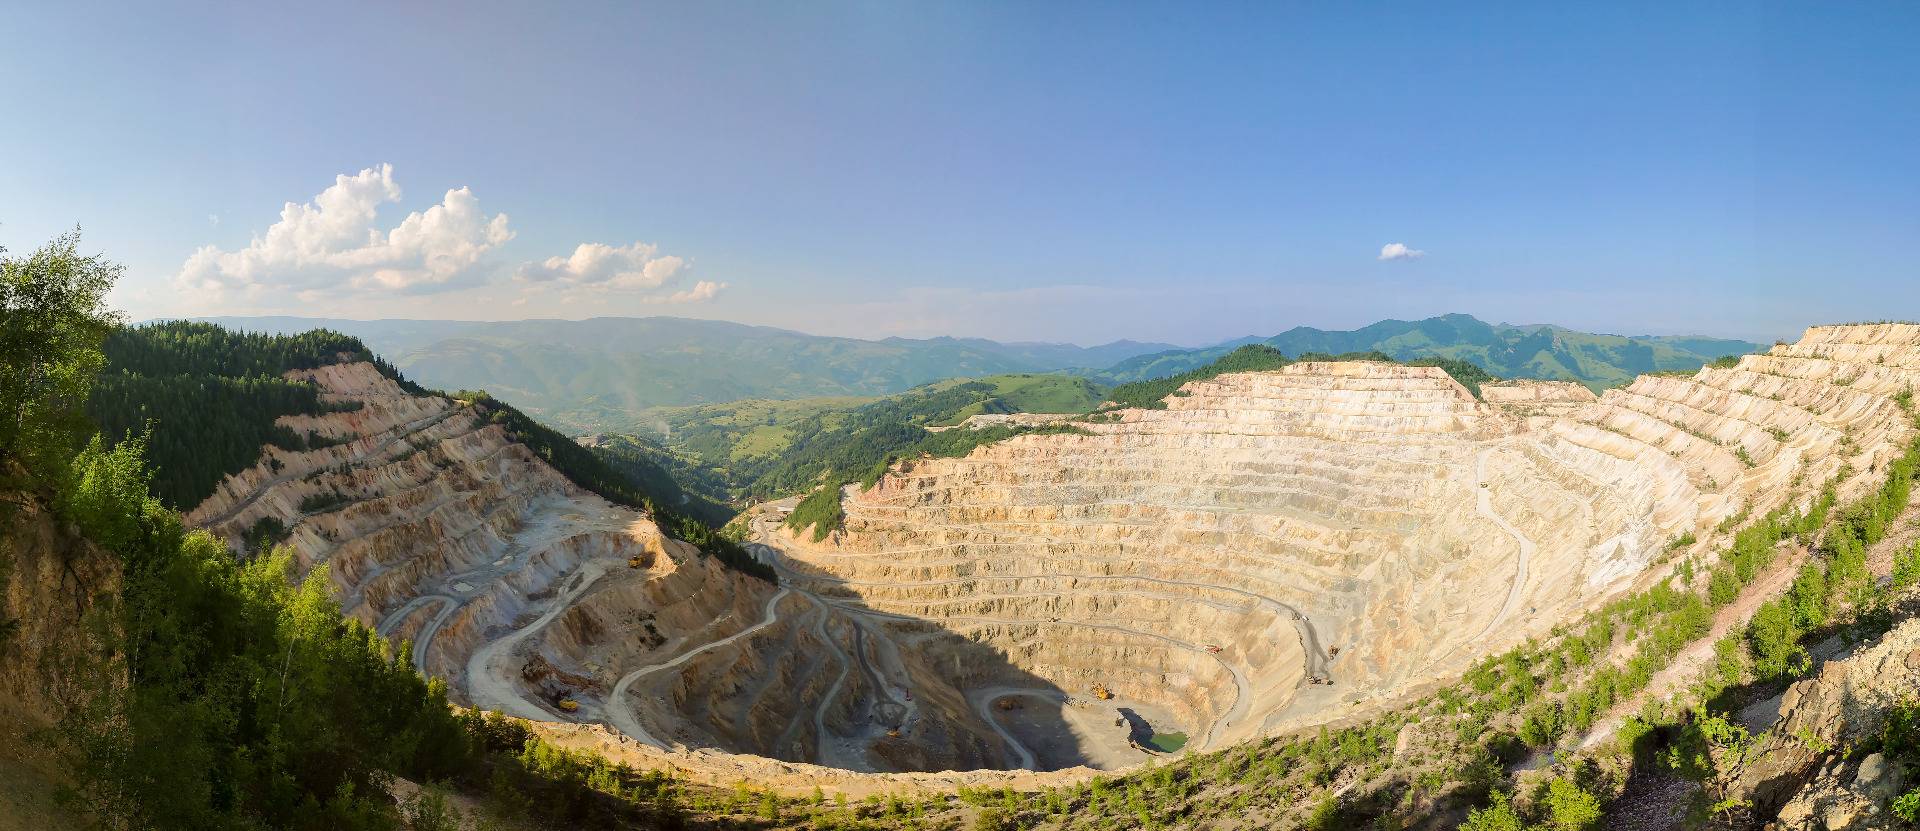 Rosia Montana open gold mine. Photo by Wander Spot Explore ©